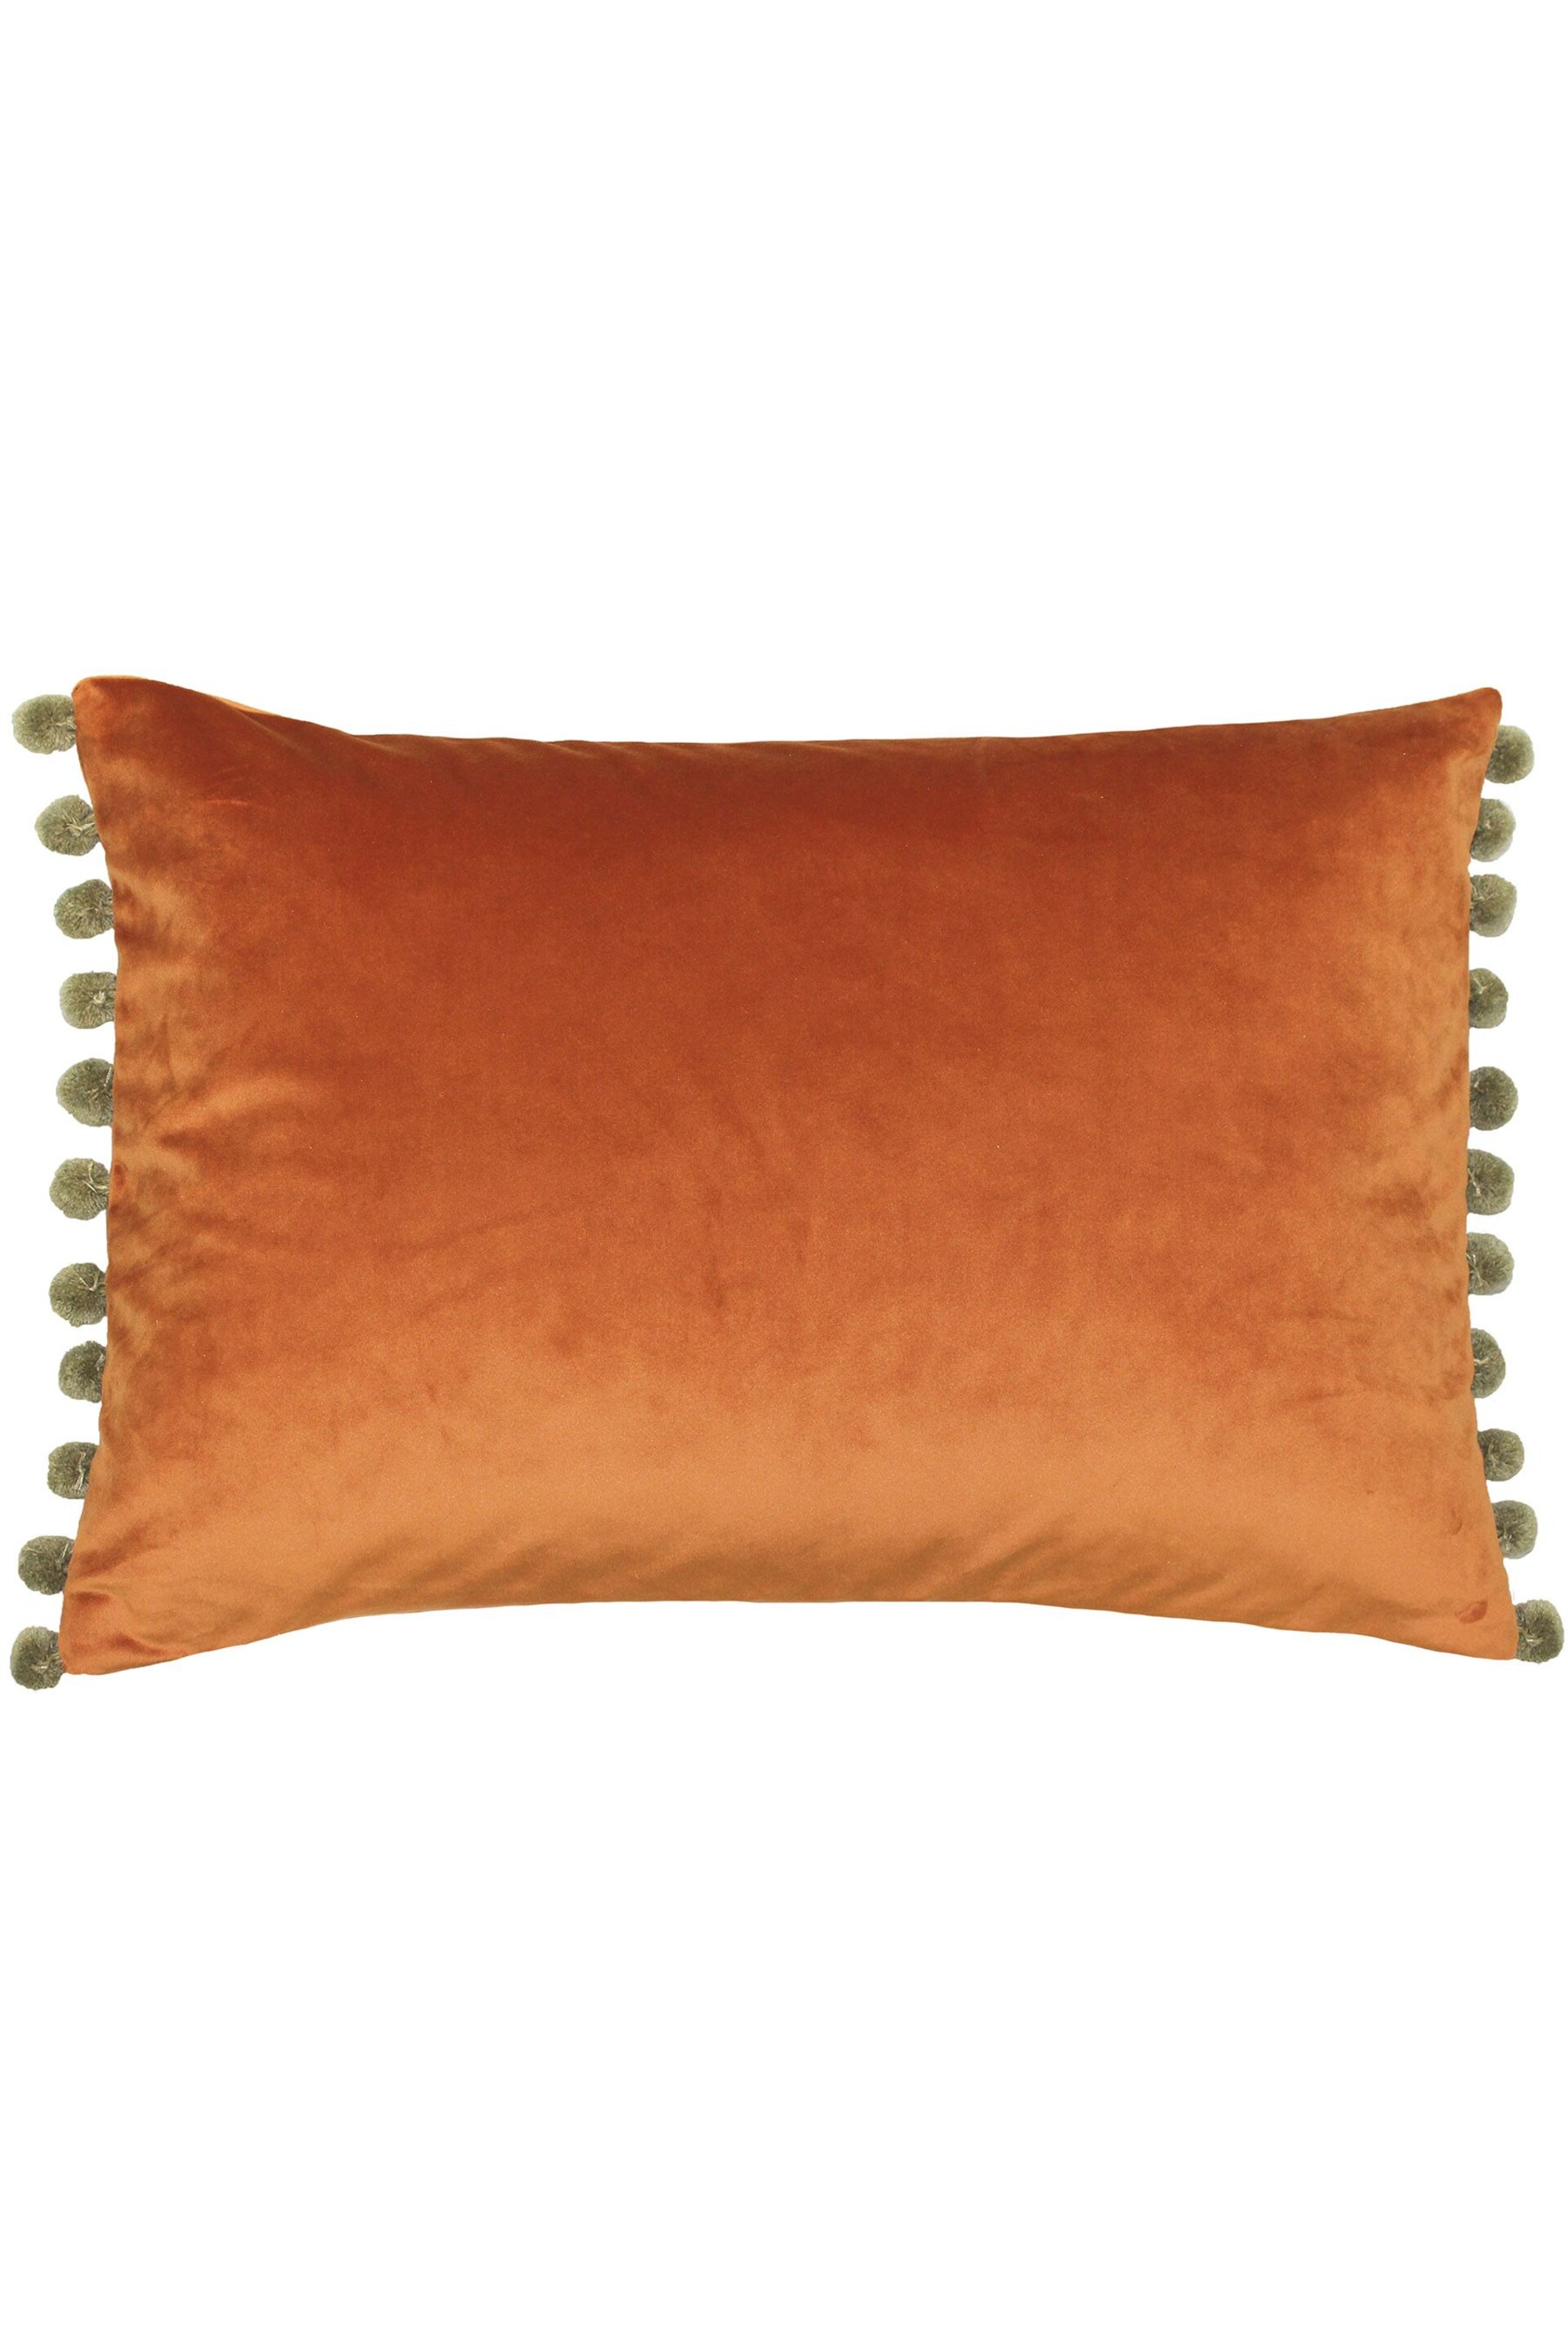 Riva Paoletti Rust Orange/Khaki Green Fiesta Velvet Polyester Filled Cushion - Image 1 of 2